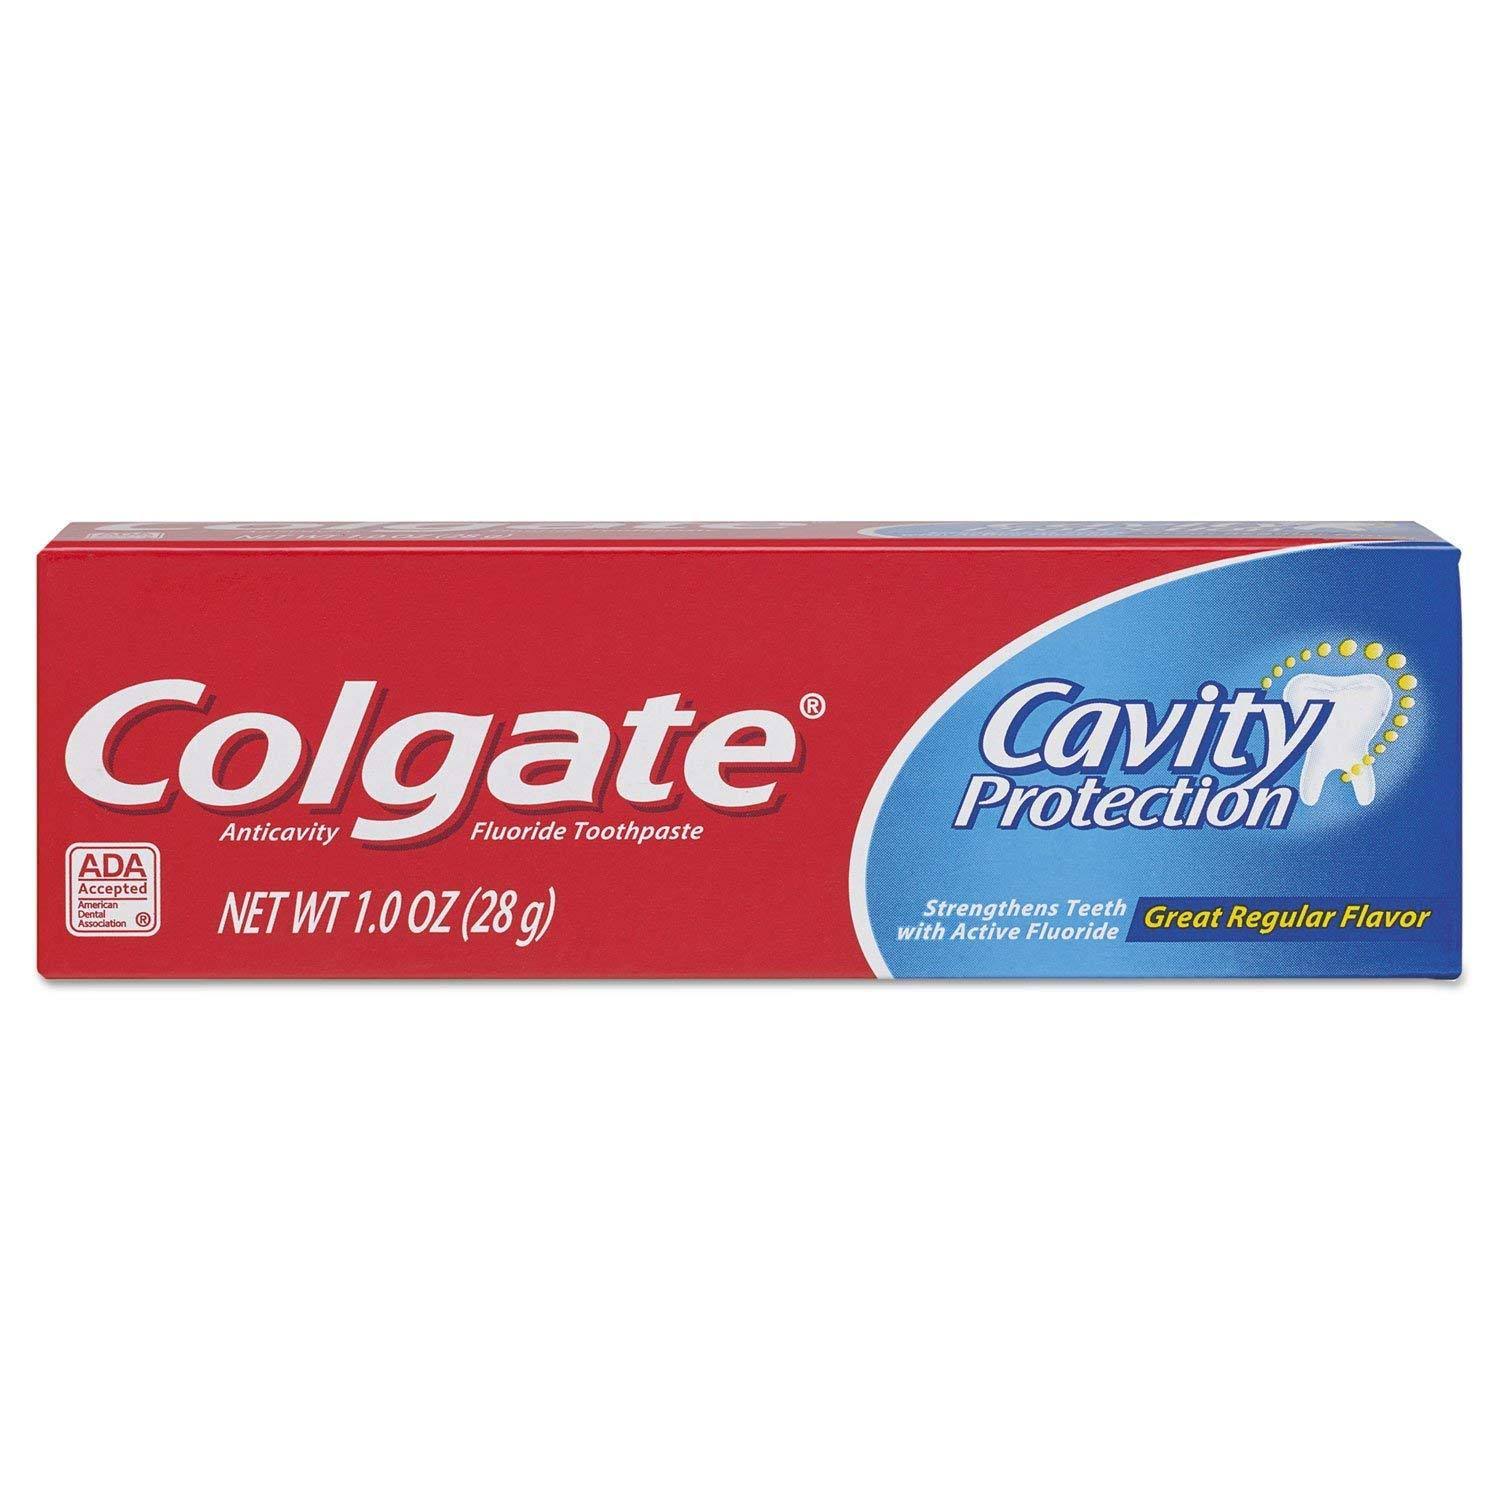 Colgate Cavity Protection Anticavity Fluoride Toothpaste - 28g